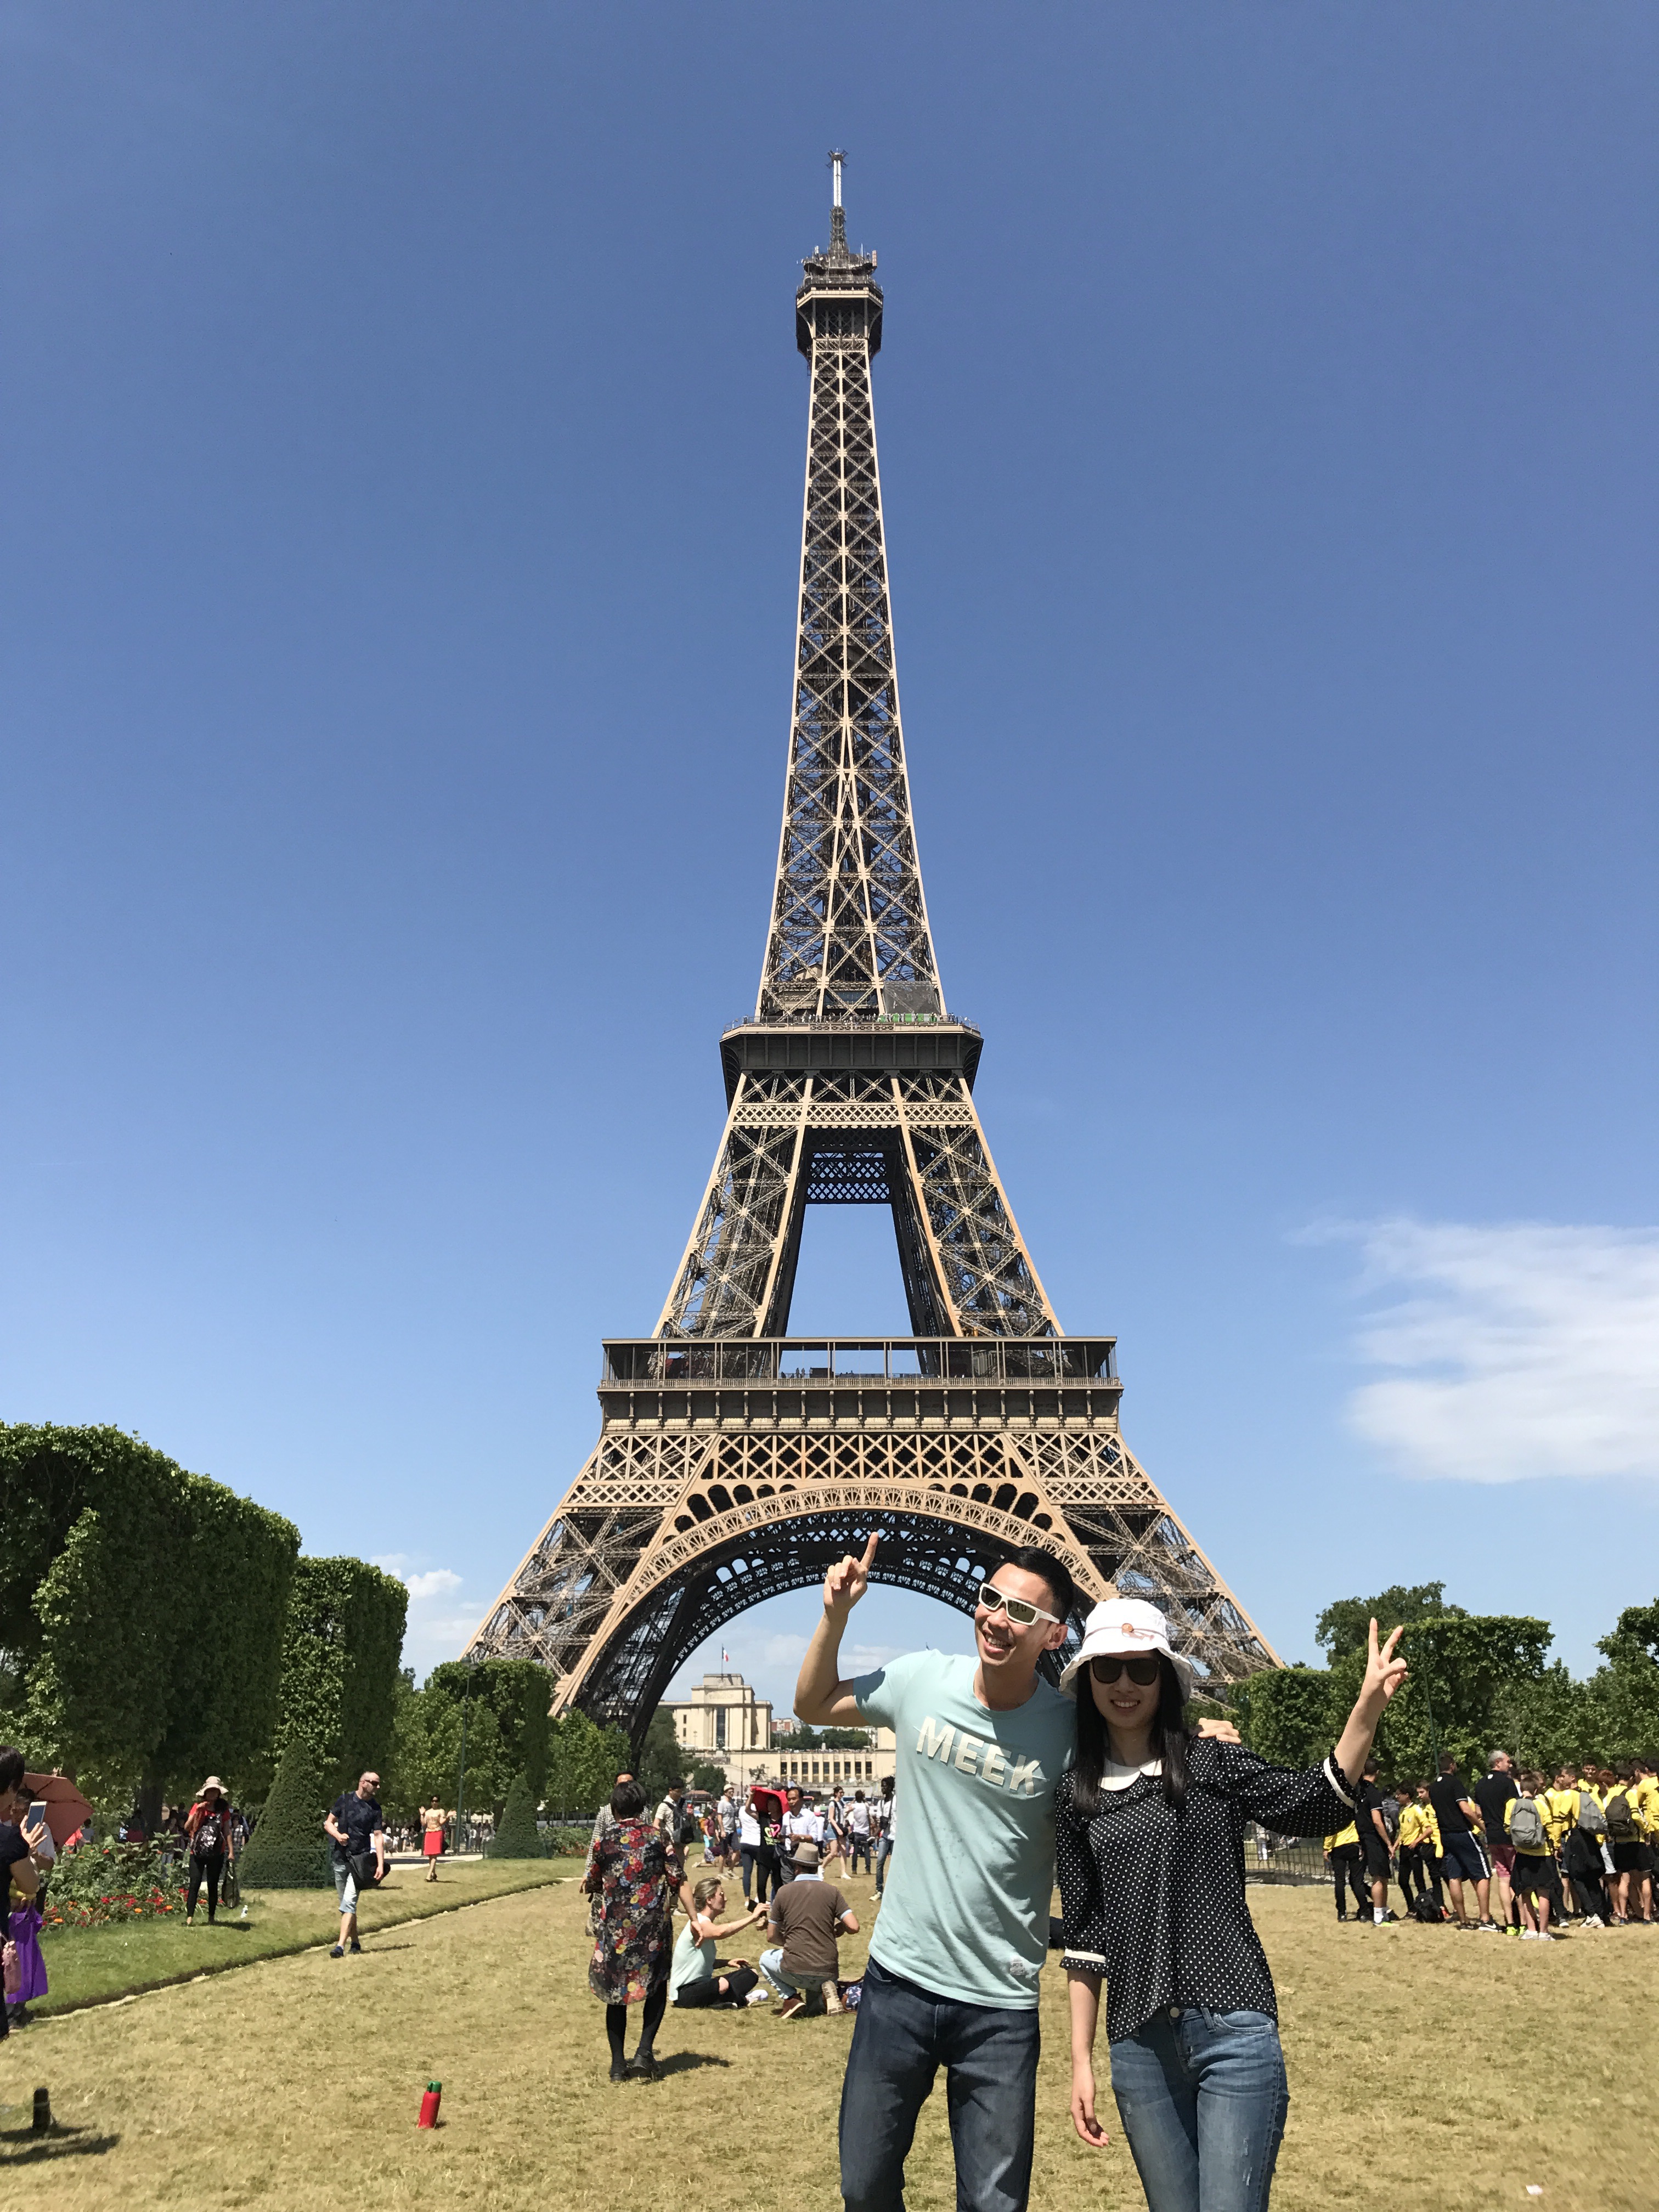 The Eiffel Tower shot  